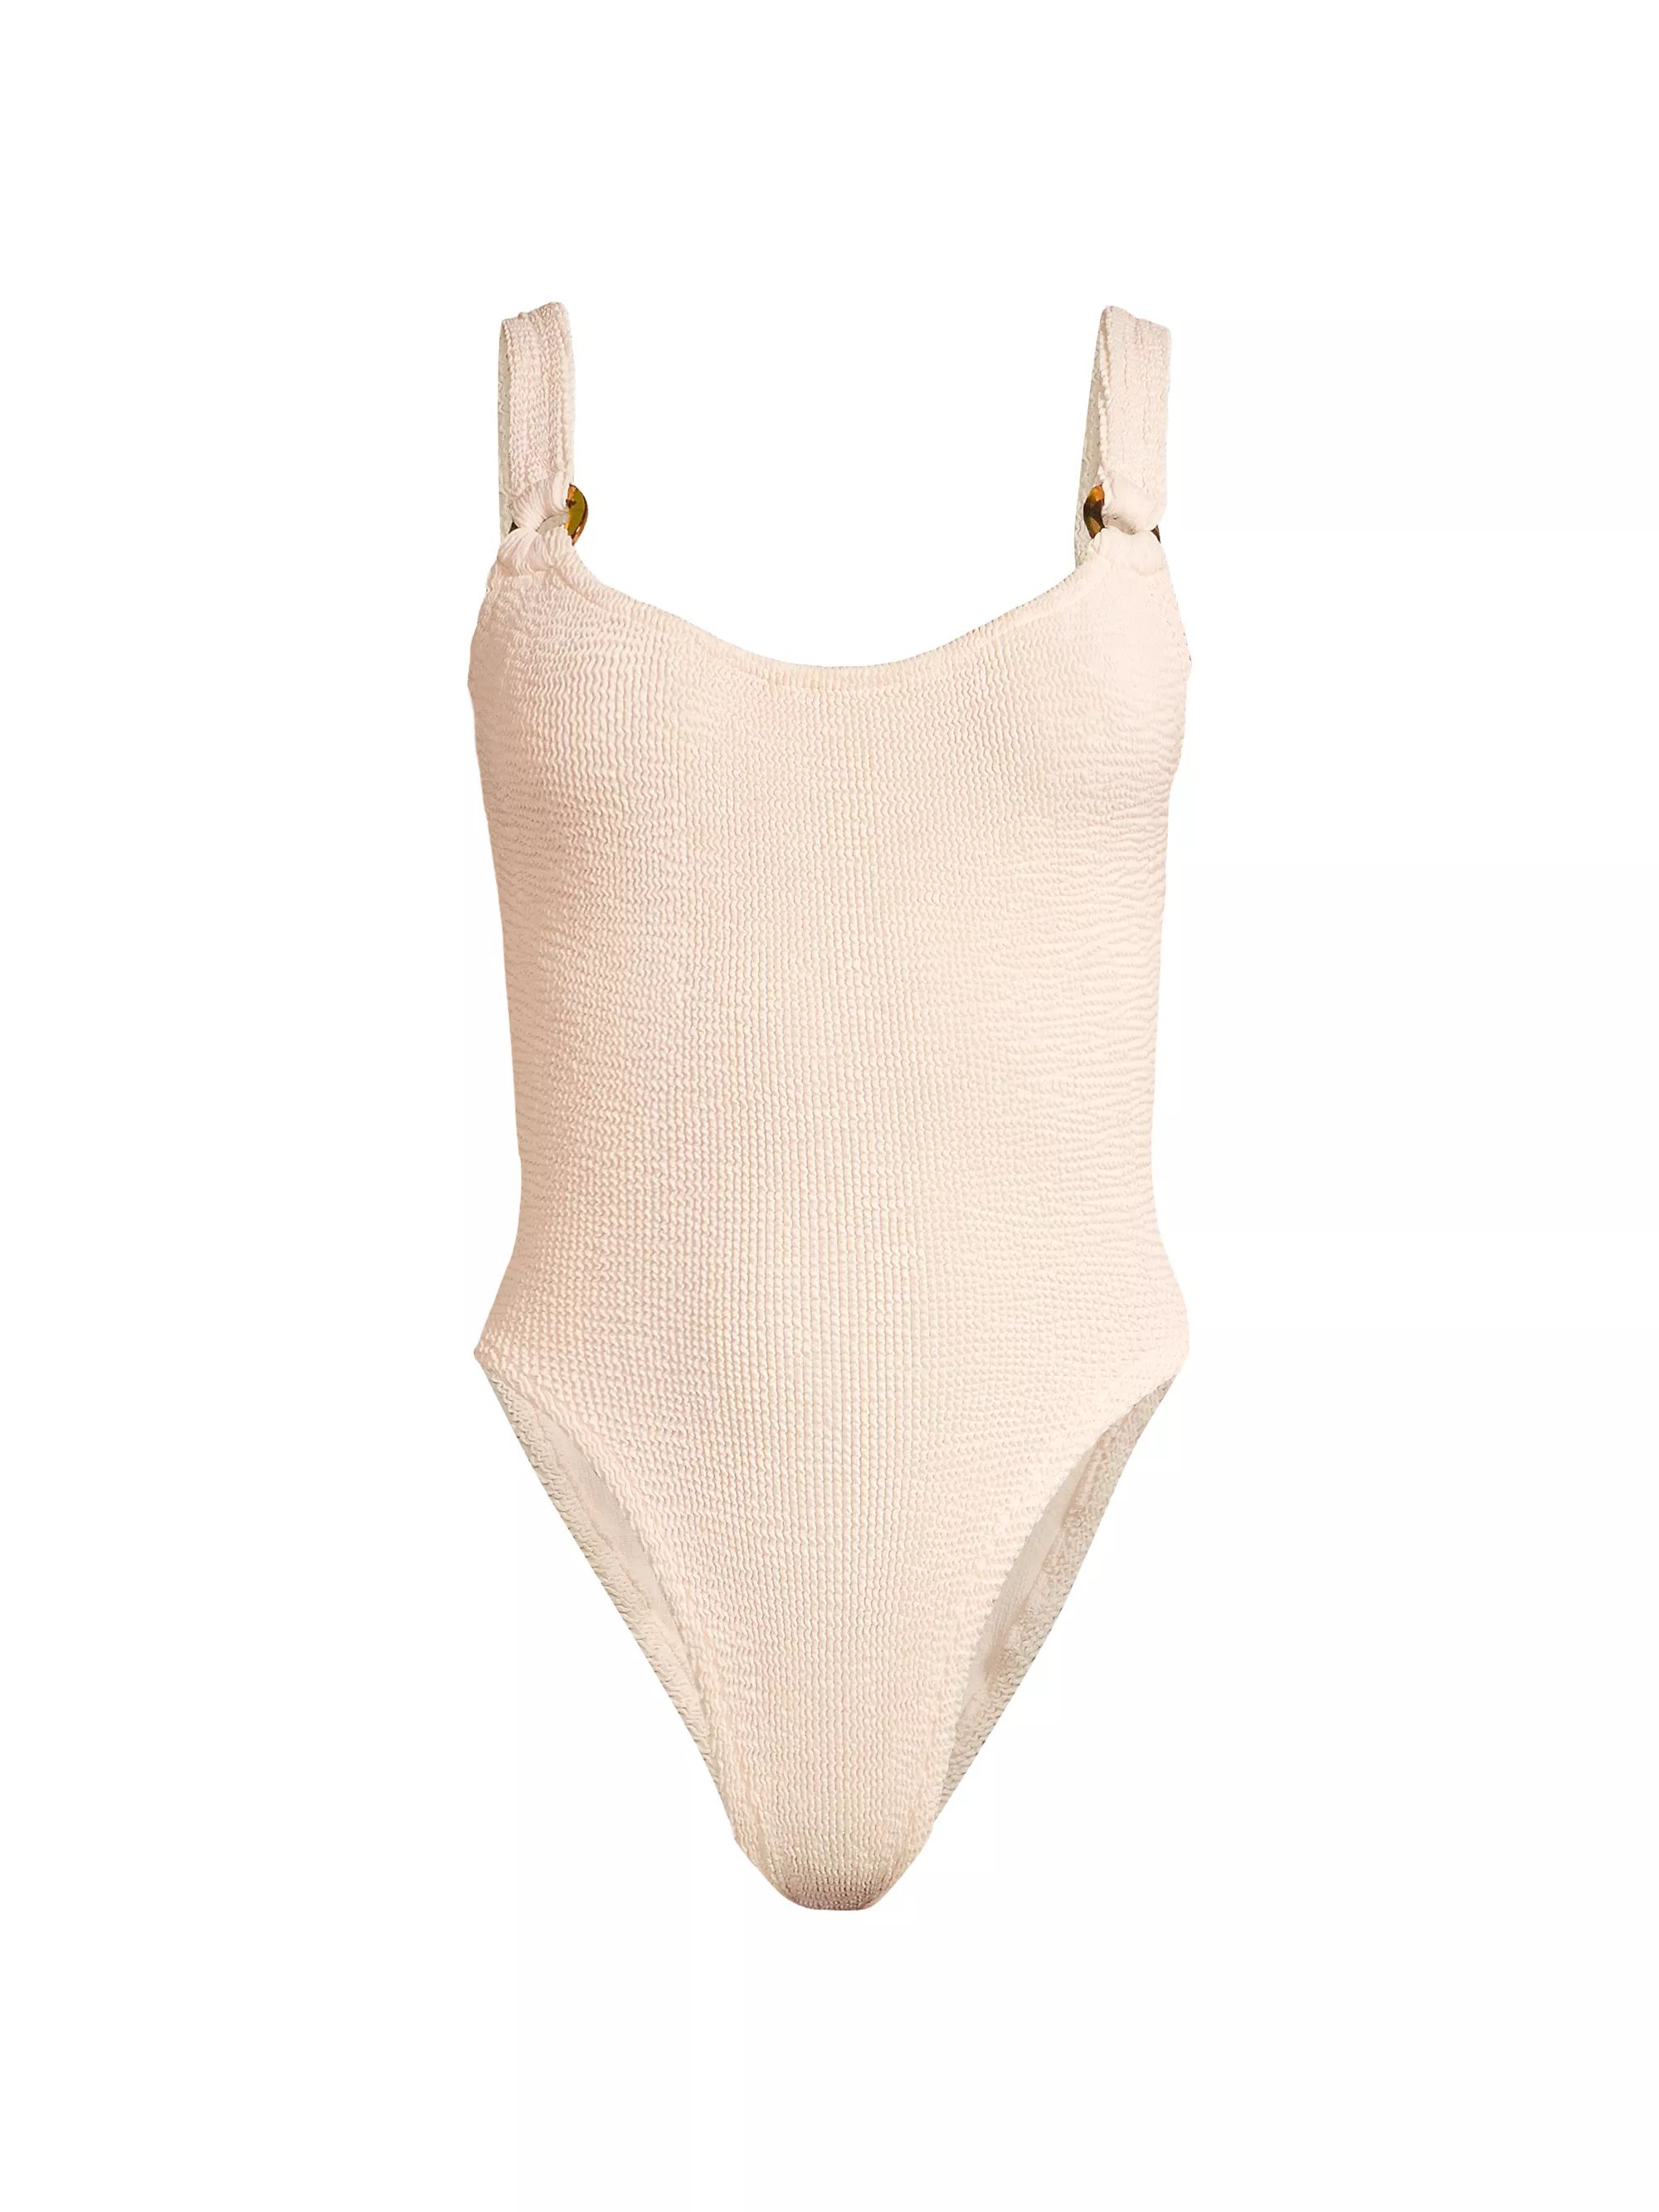 Shop Hunza G Domino One-Piece Swimsuit | Saks Fifth Avenue | Saks Fifth Avenue